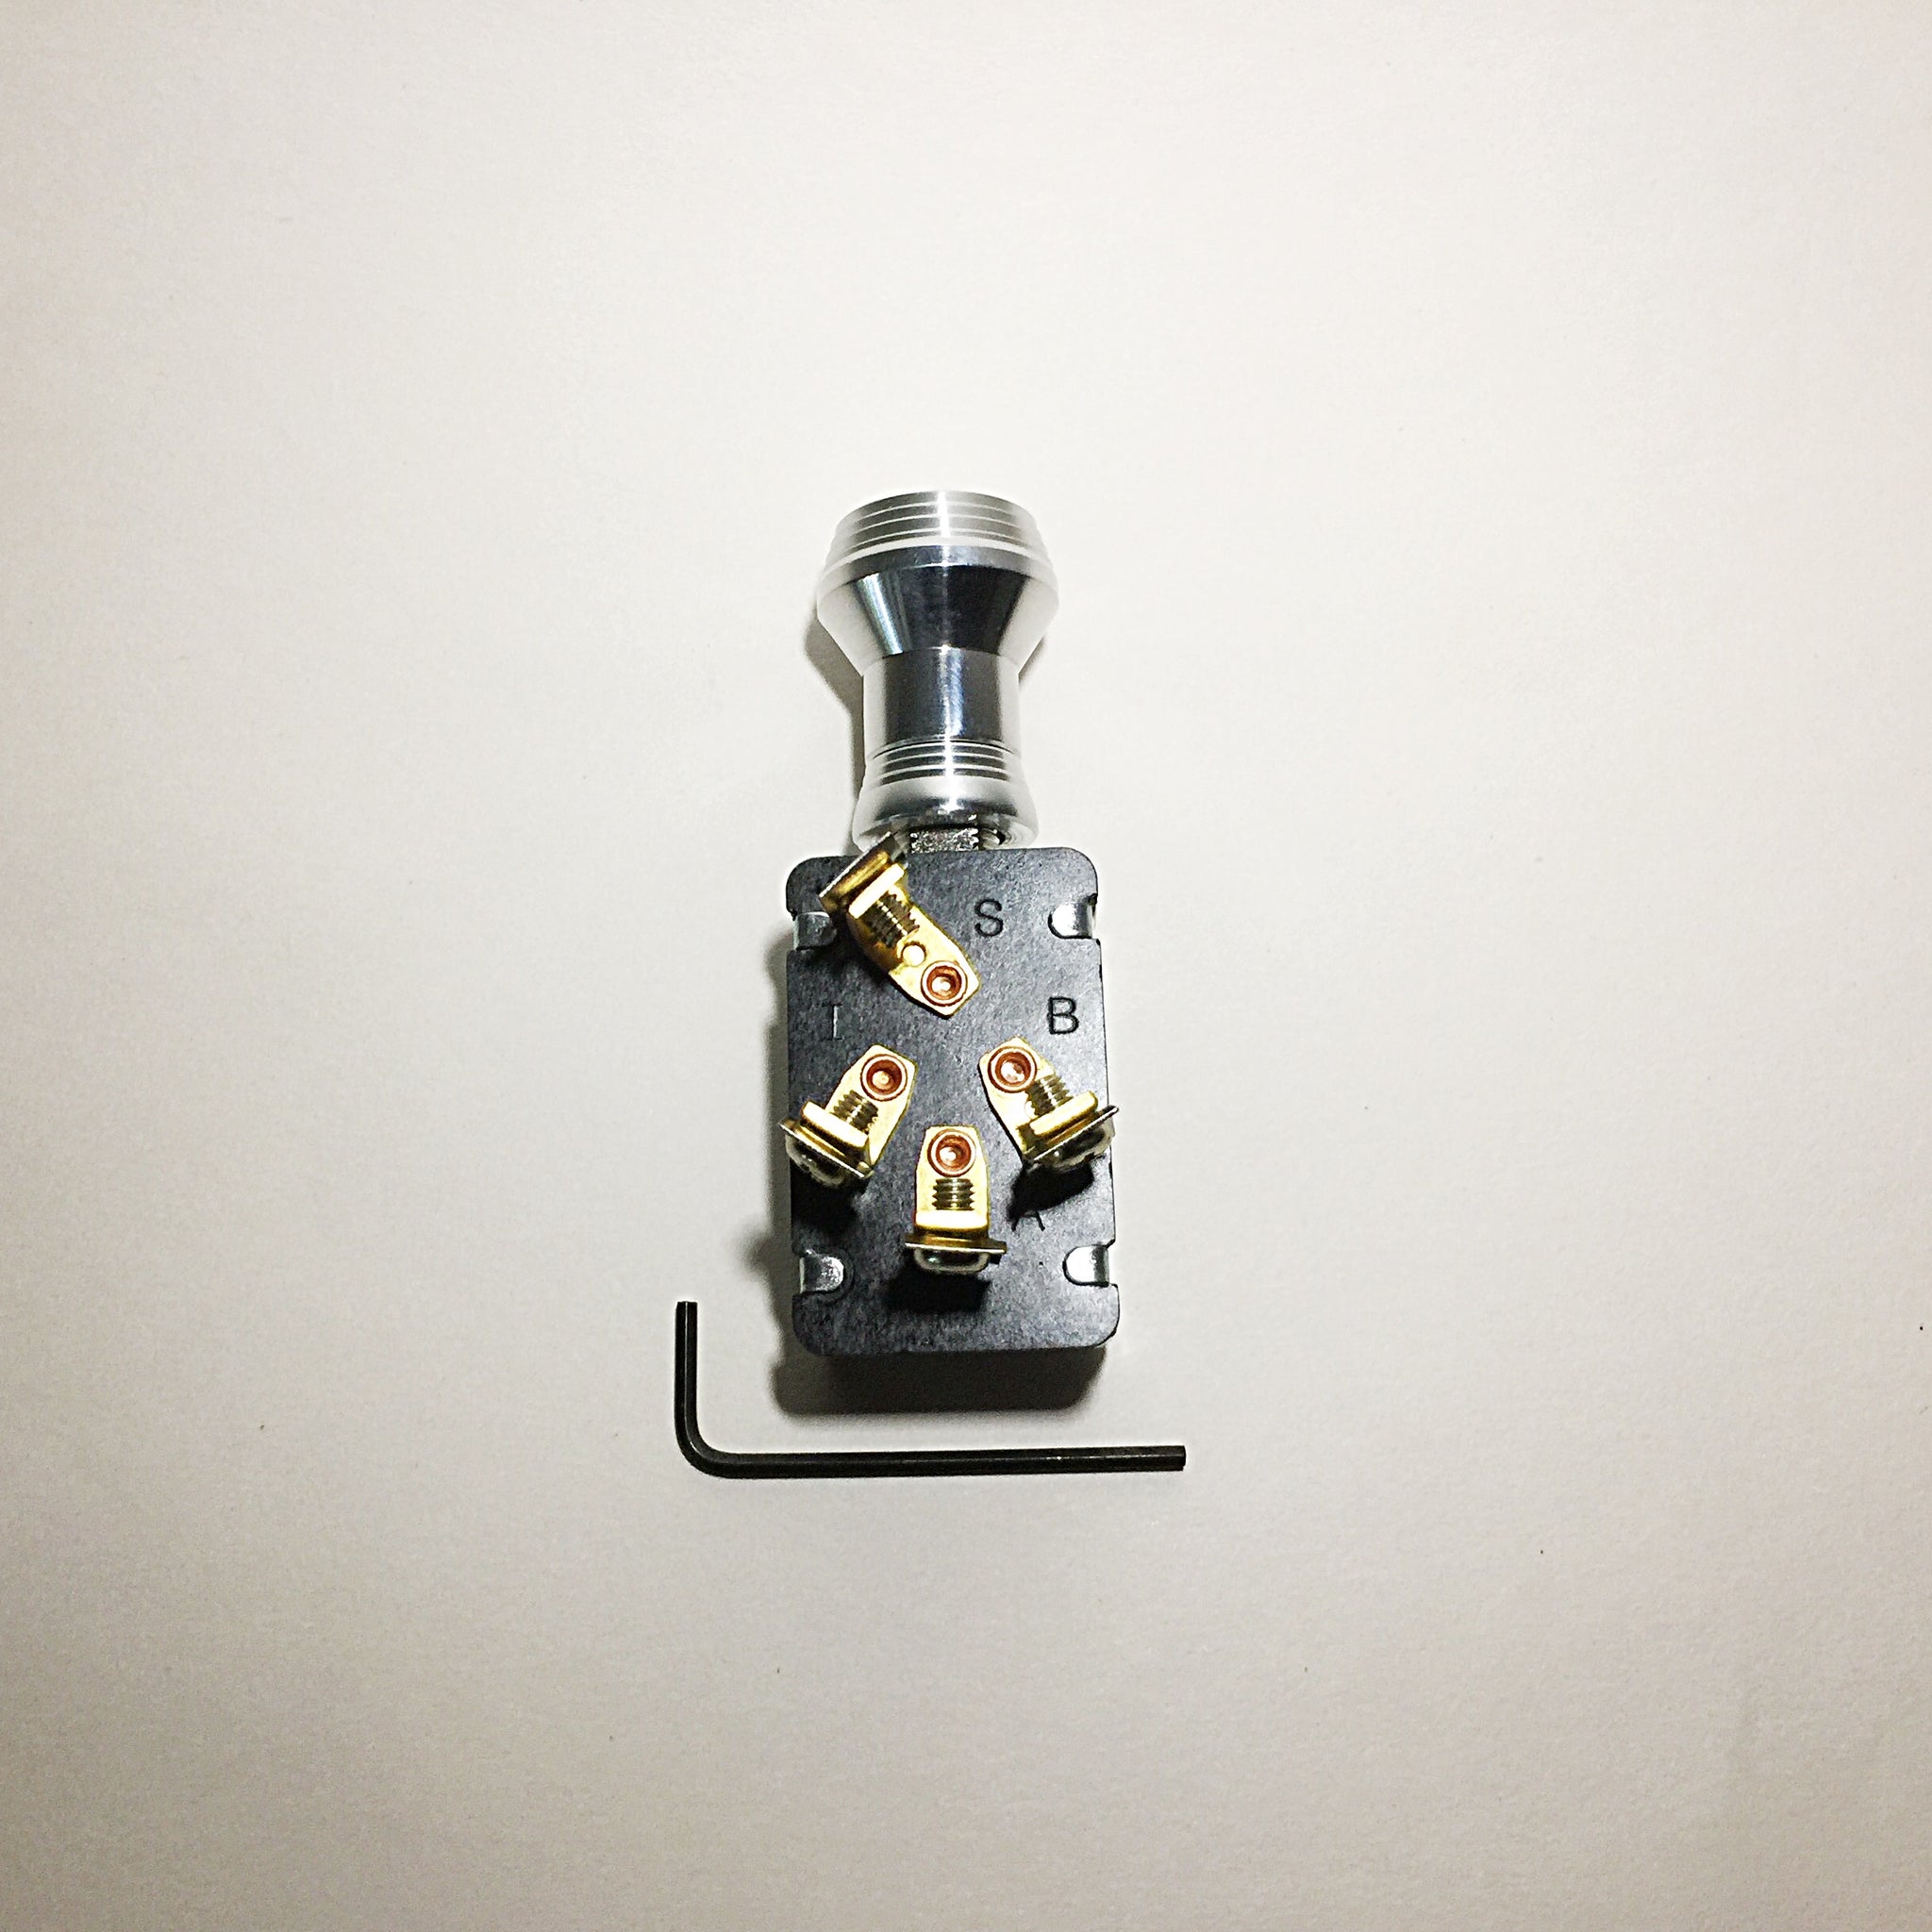 Keyless Ignition Switch - Custom Aluminum Knob & Bezel